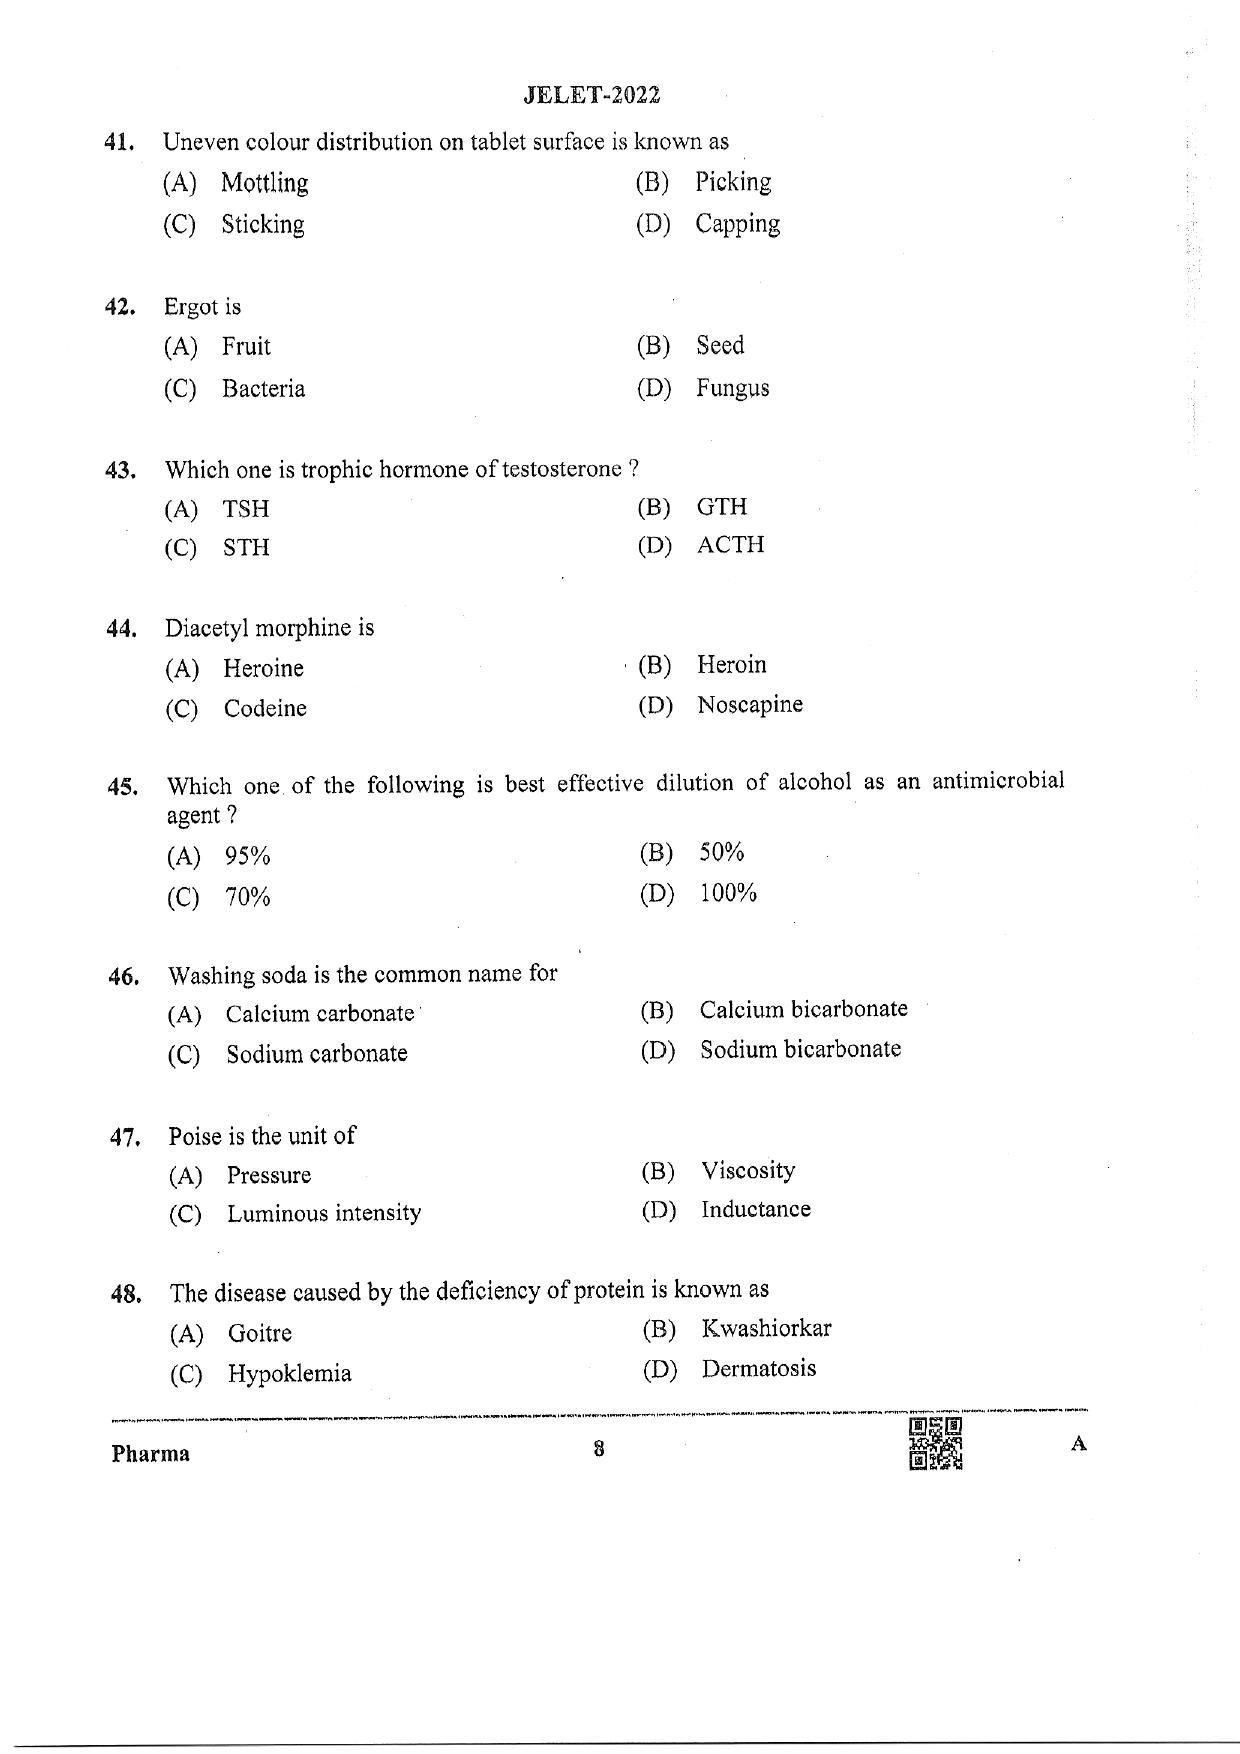 WBJEE  JELET 2022 Paper II ( Pharmacy) - Page 8